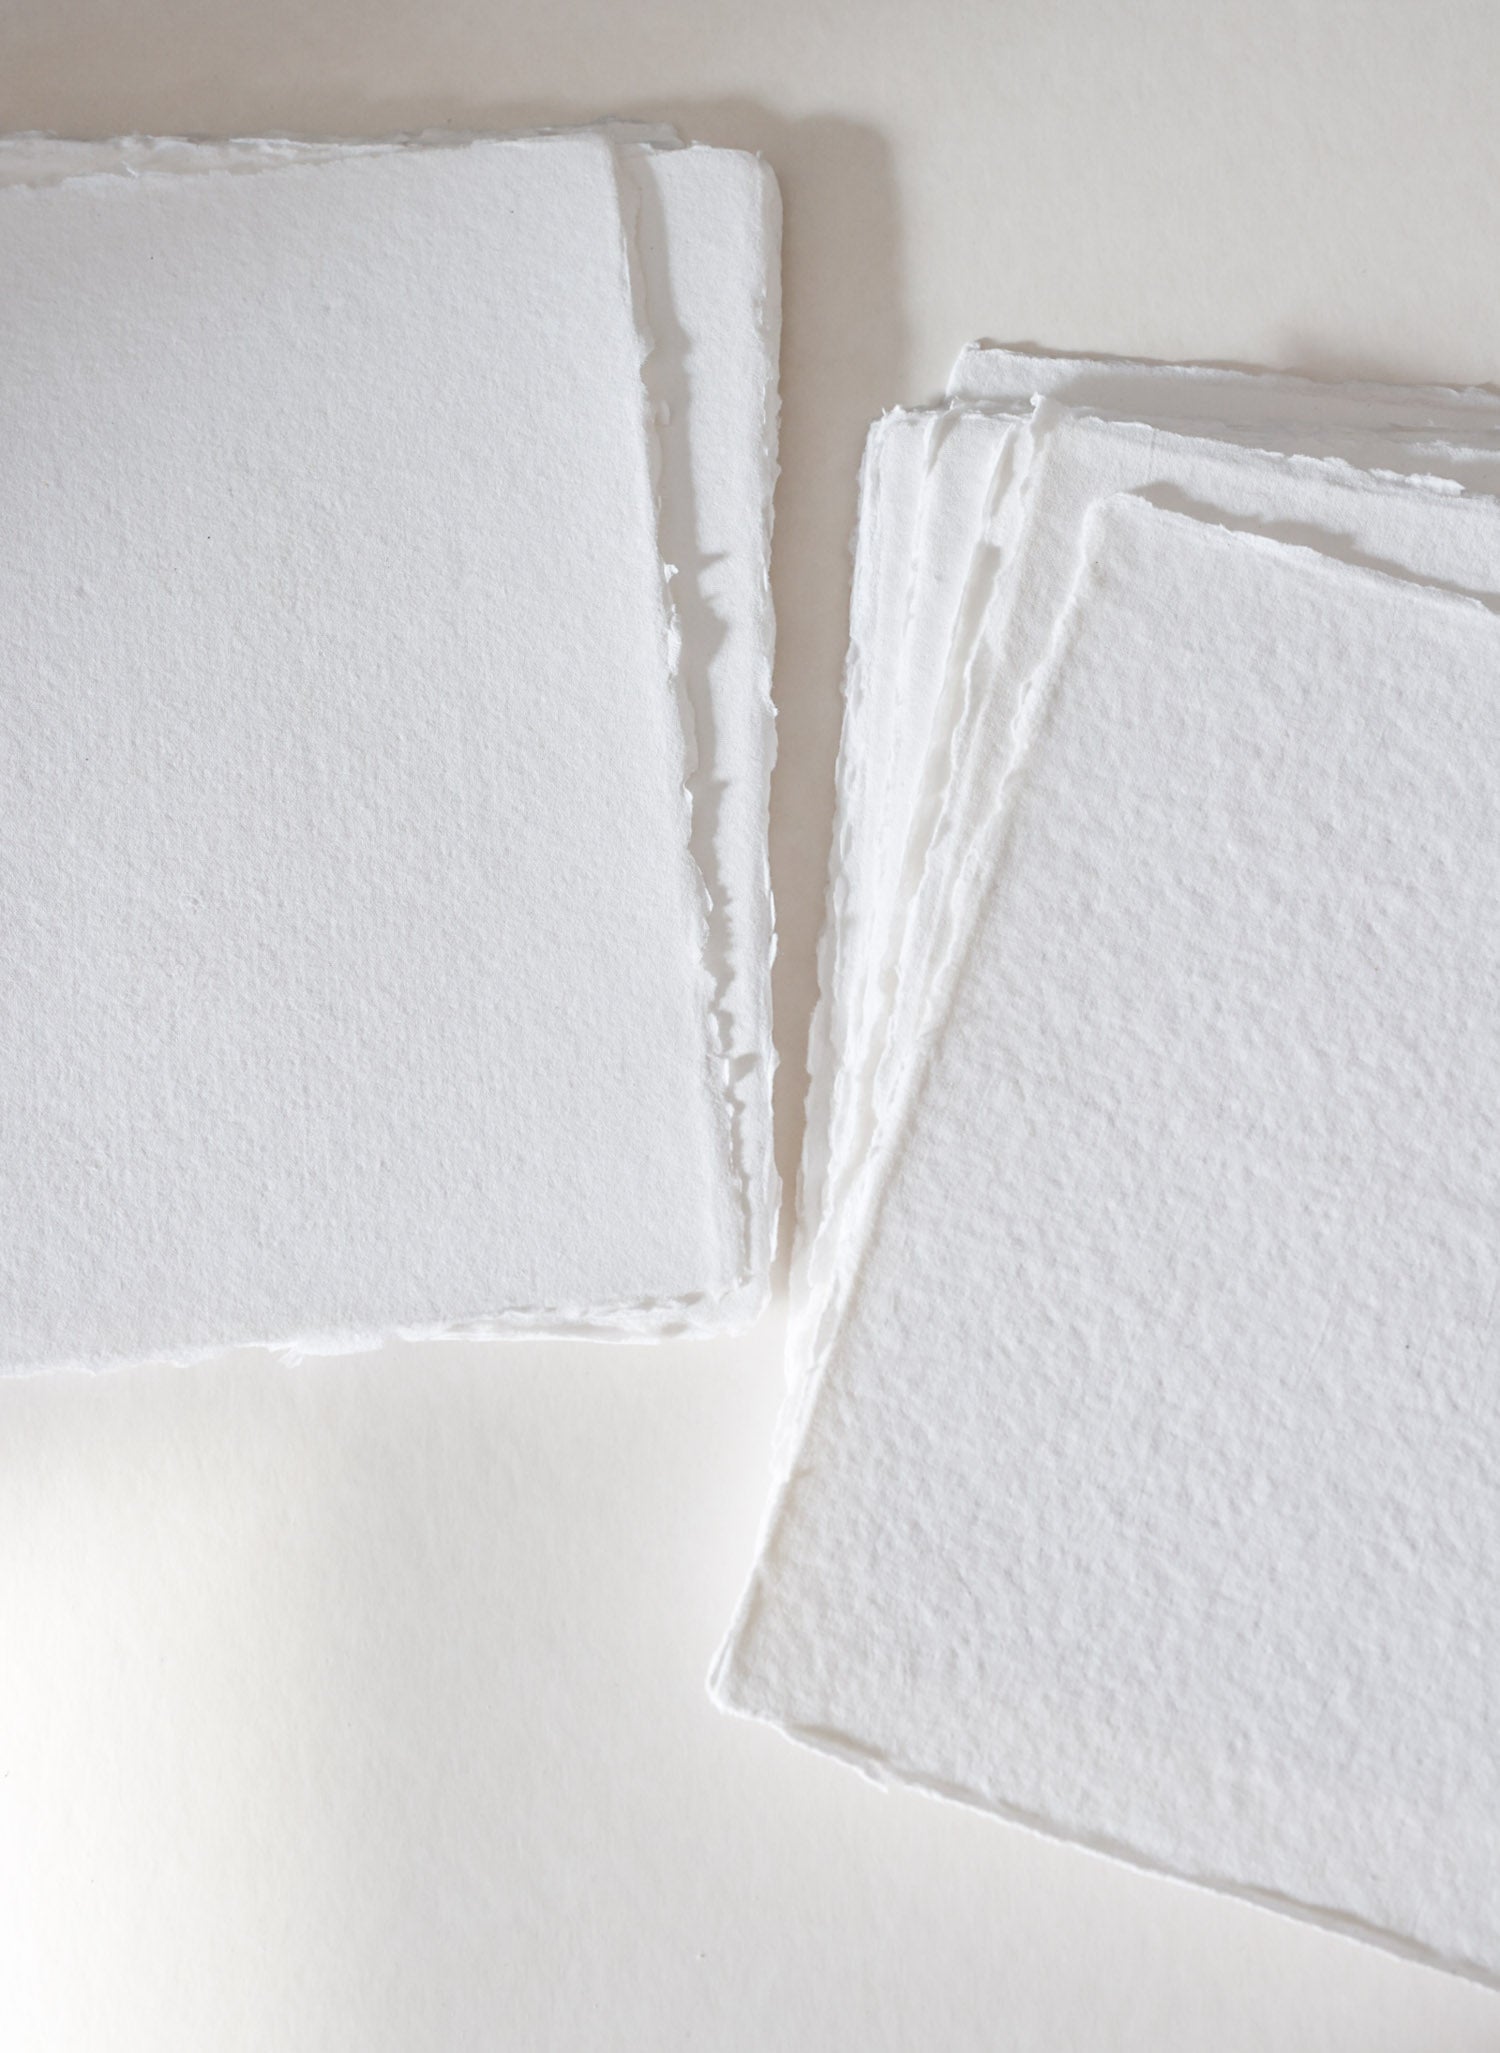 White deckle edge handmade COTTON RAG paper